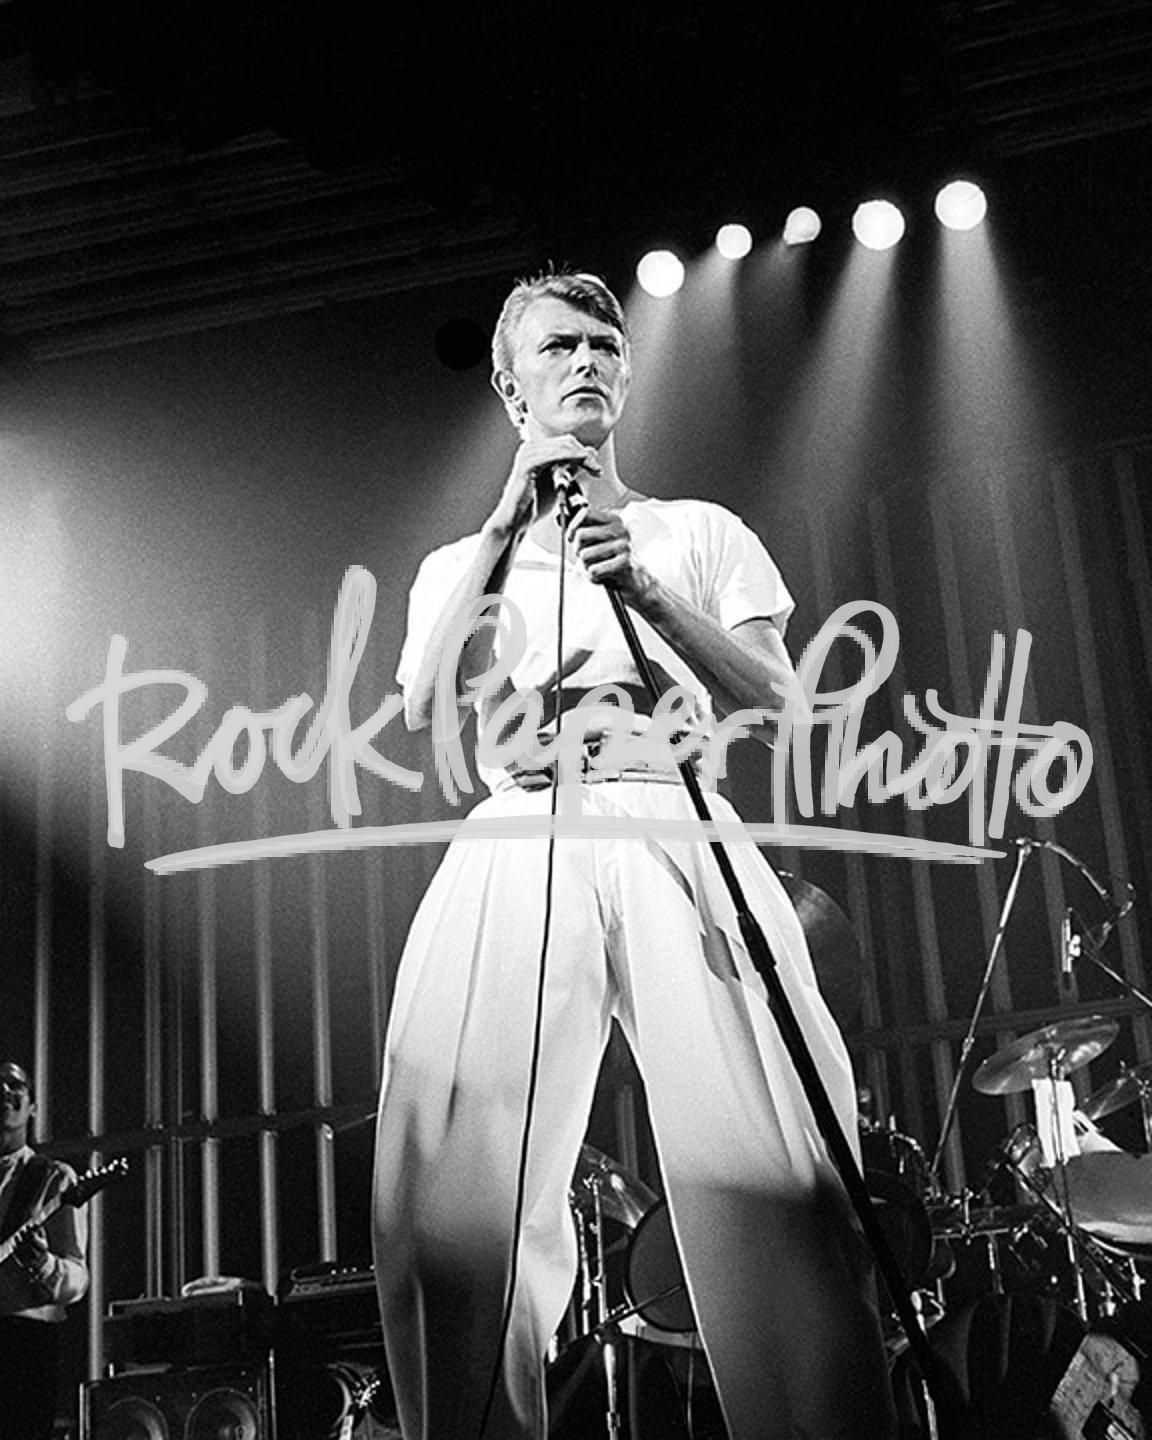 David Bowie by Larry Hulst